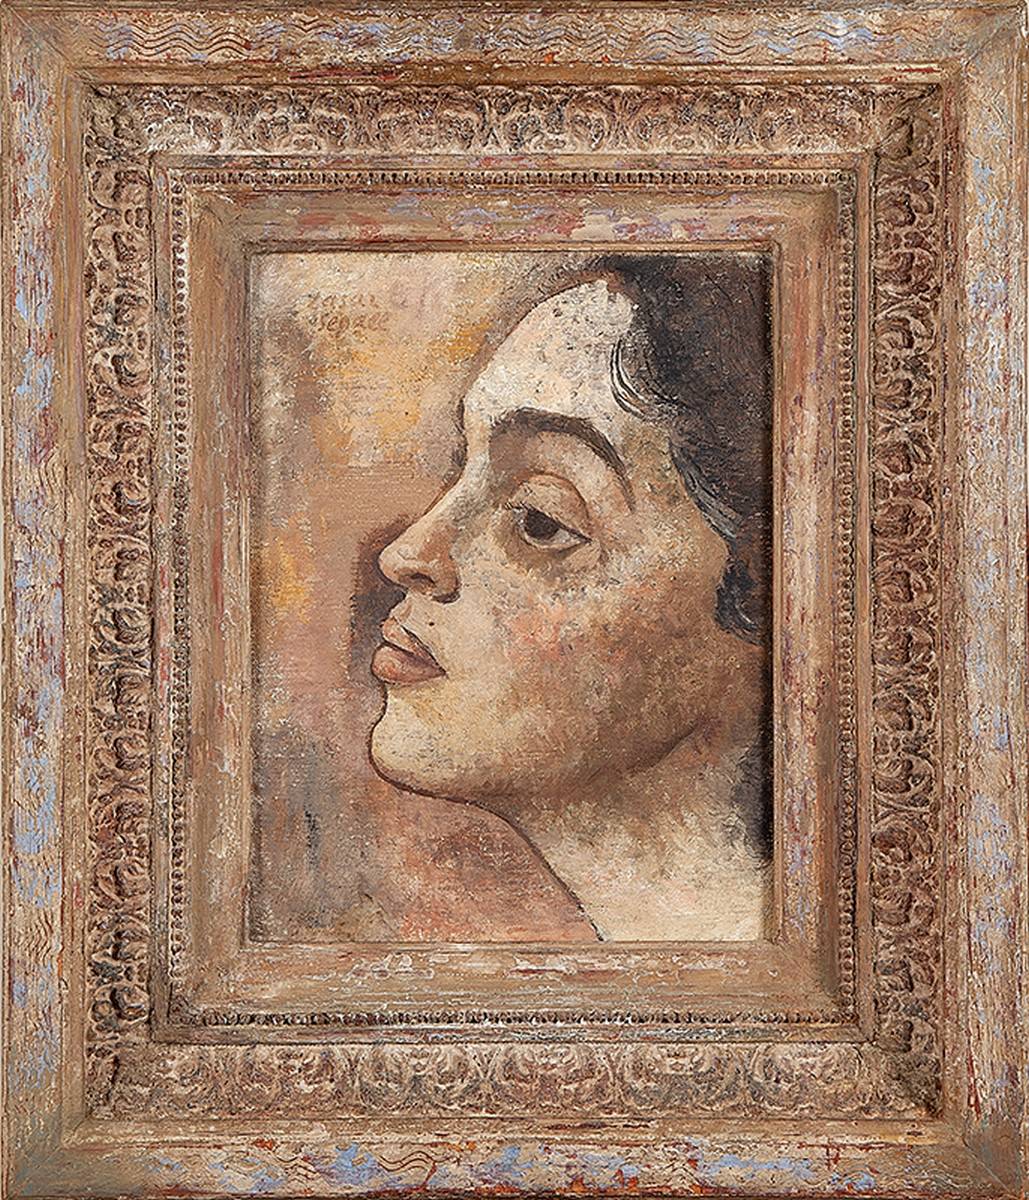 LASAR SEGALL, Πορτρέτο της Λούσι. Οστ, 33 x 40. Υπογράφηκε στο cse και με ημερομηνία 1936.